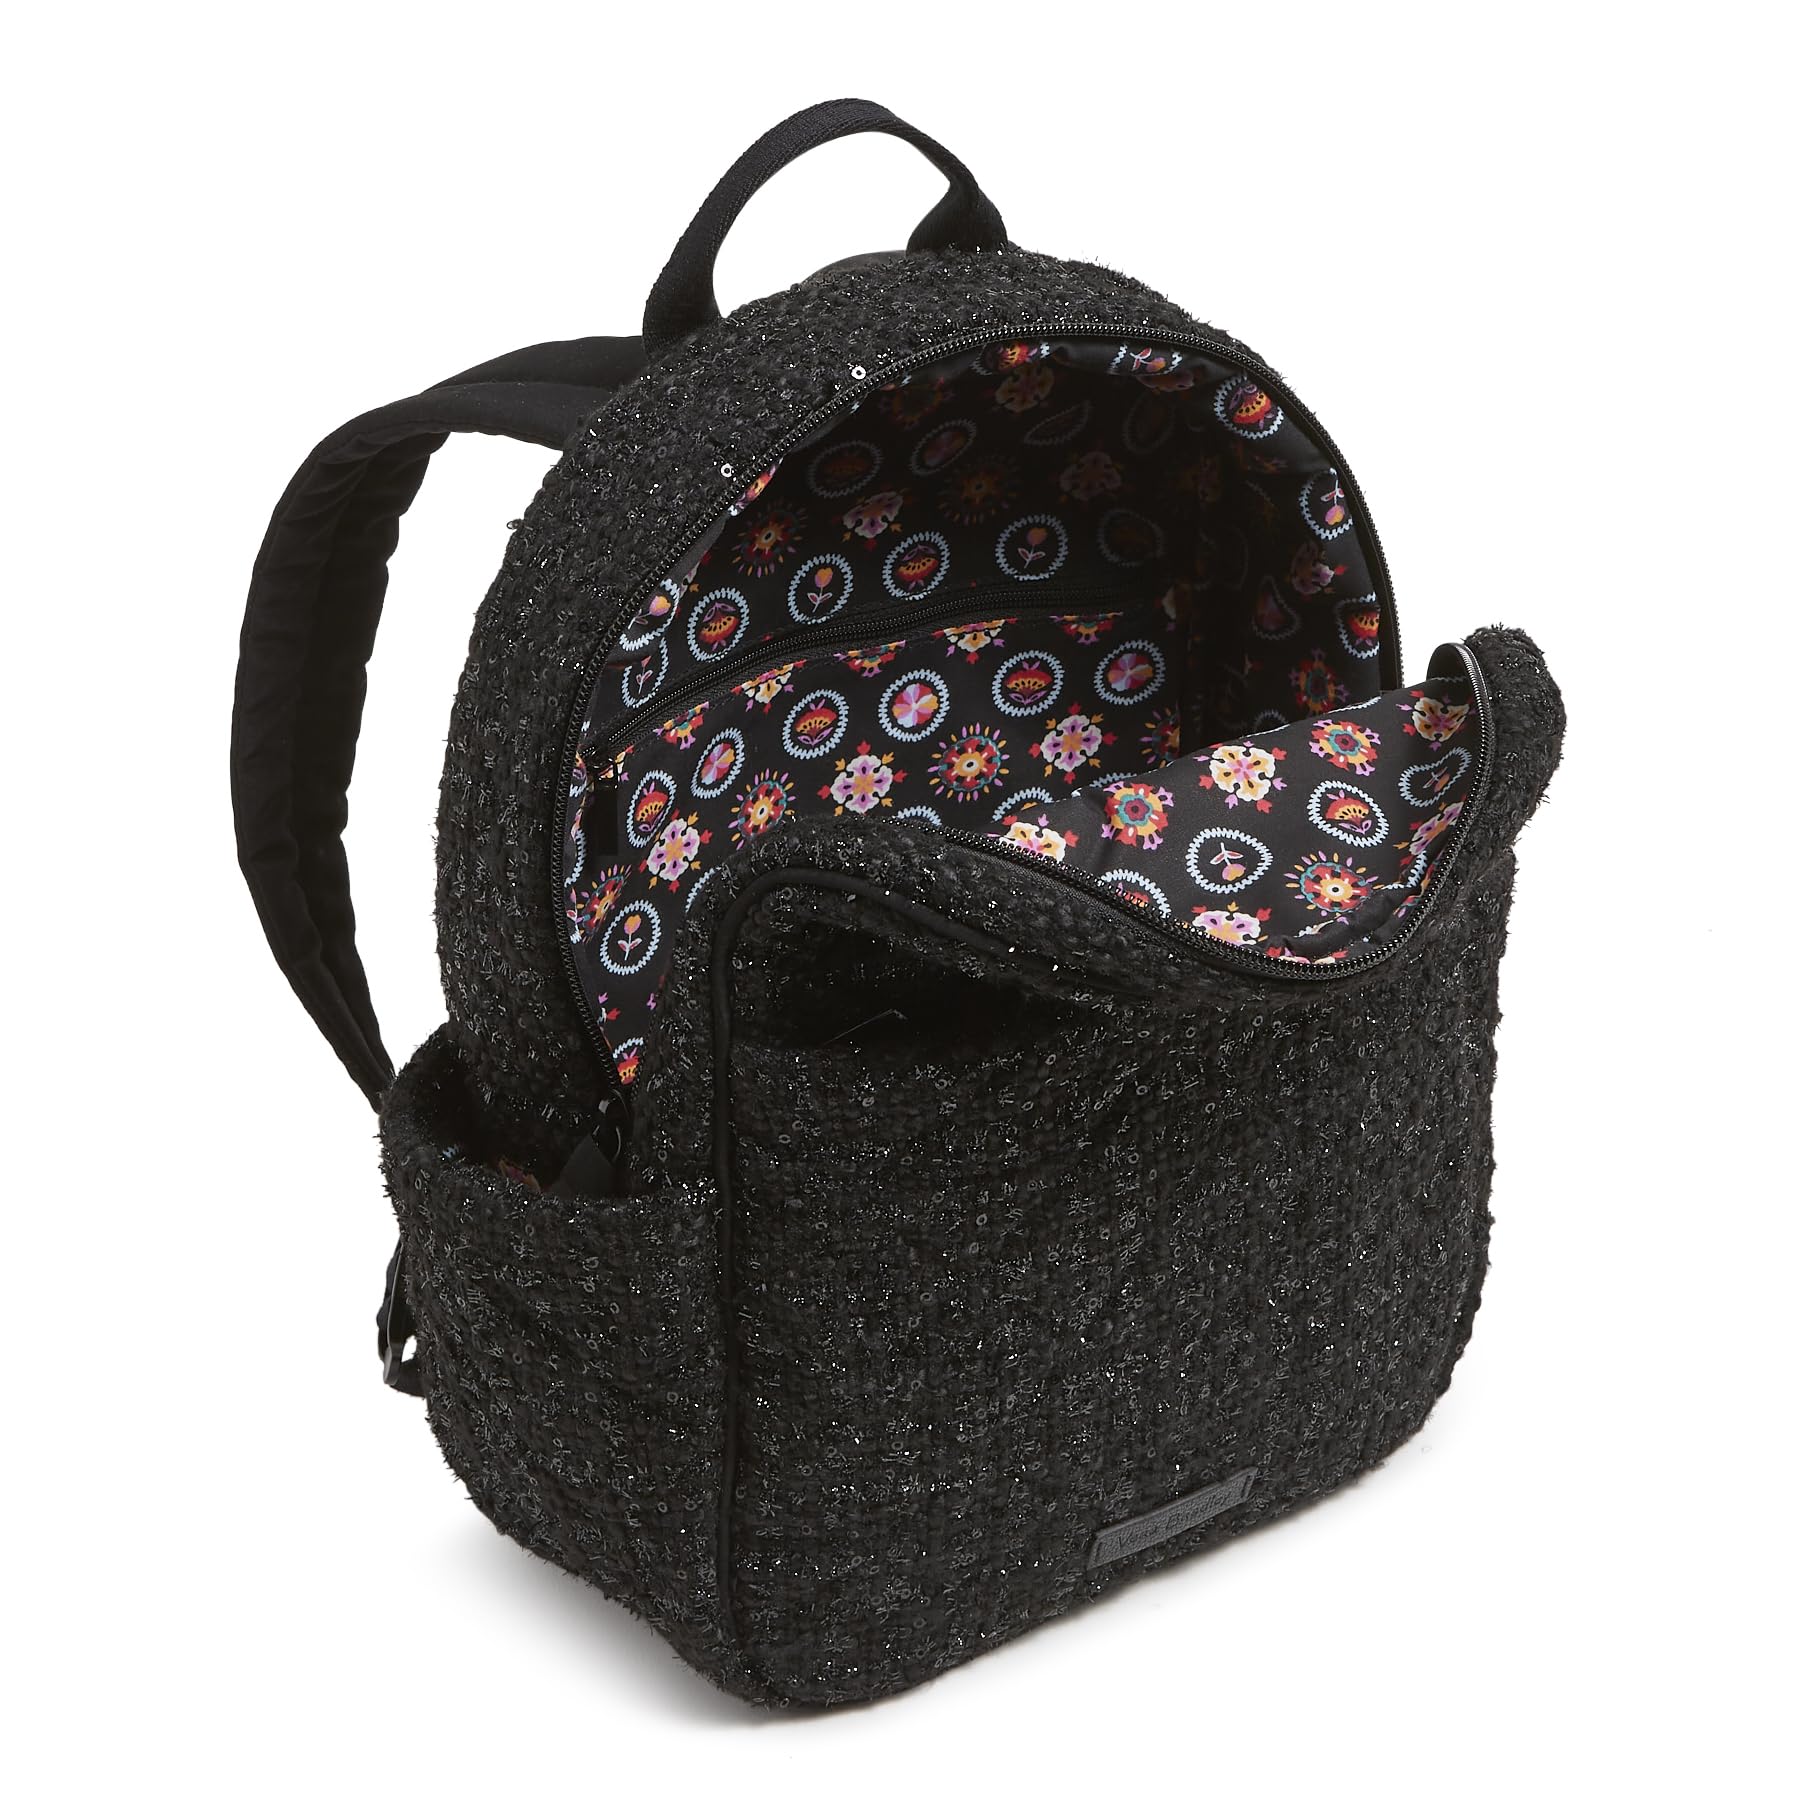 Vera Bradley Women's Cotton Small Backpack, Black, One Size